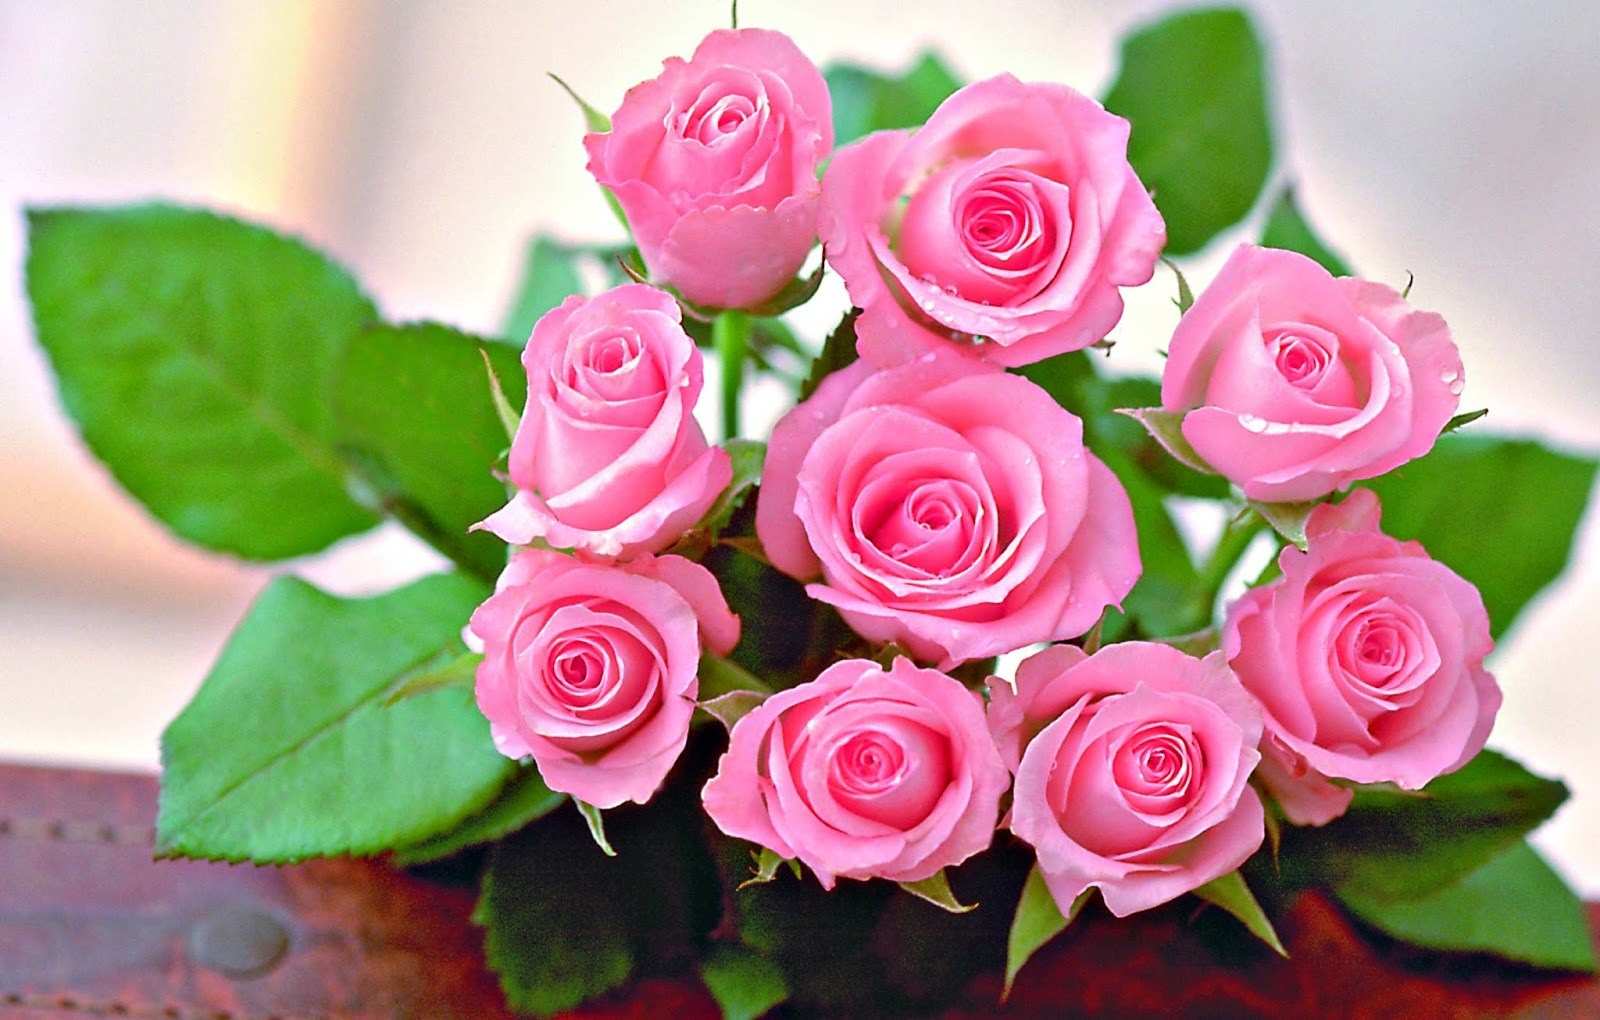 carta da parati bunga cantik,fiore,pianta fiorita,rose da giardino,rosa,rosa